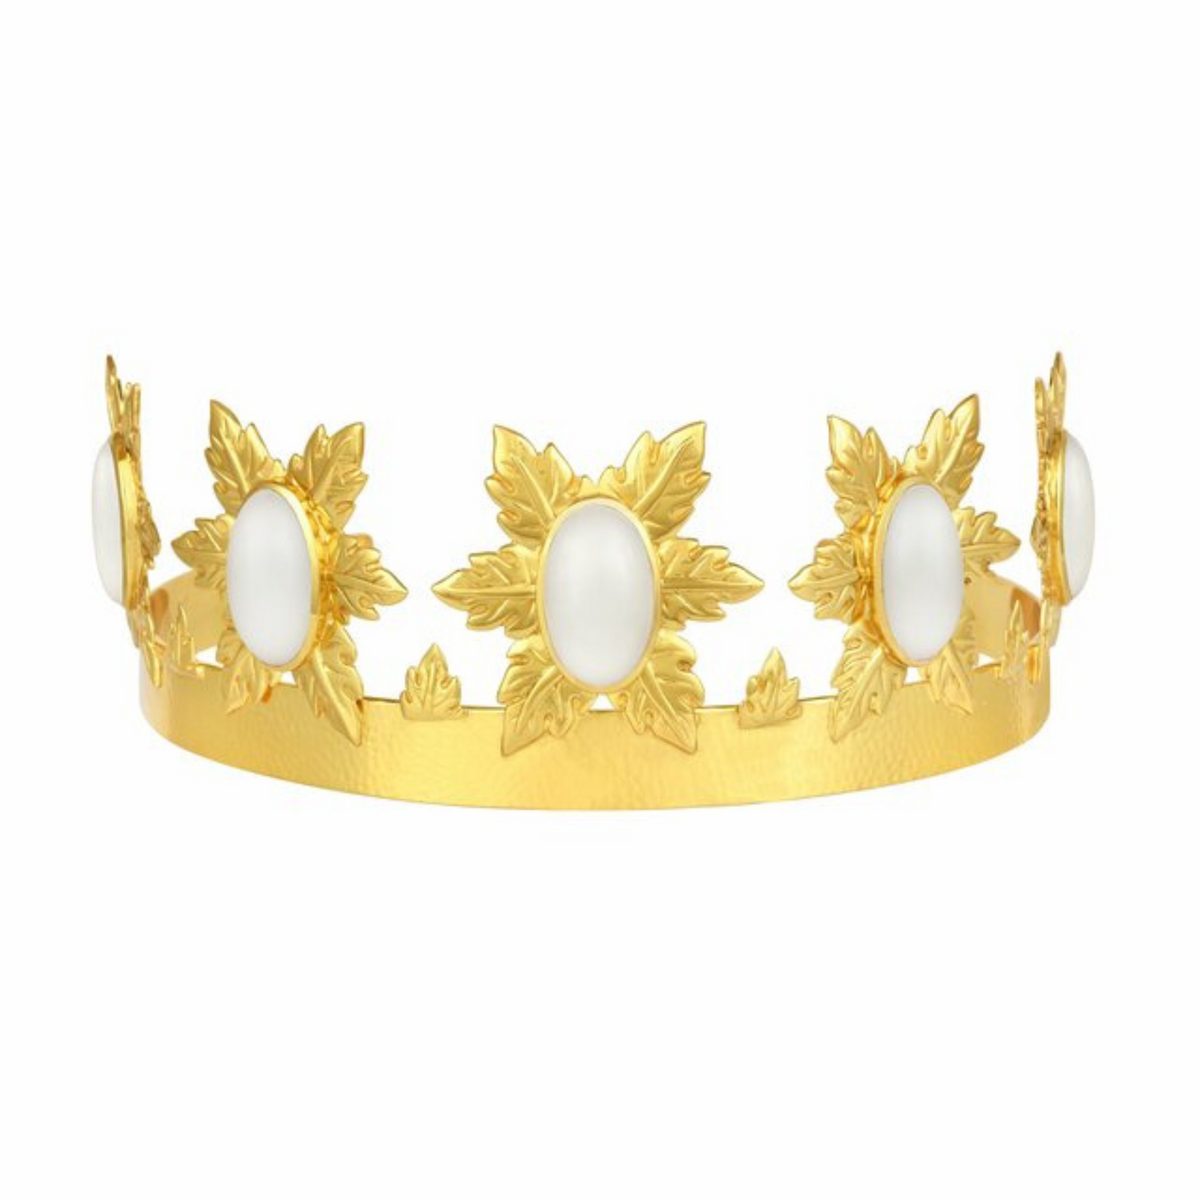 Florentina Crown (Gold/White)